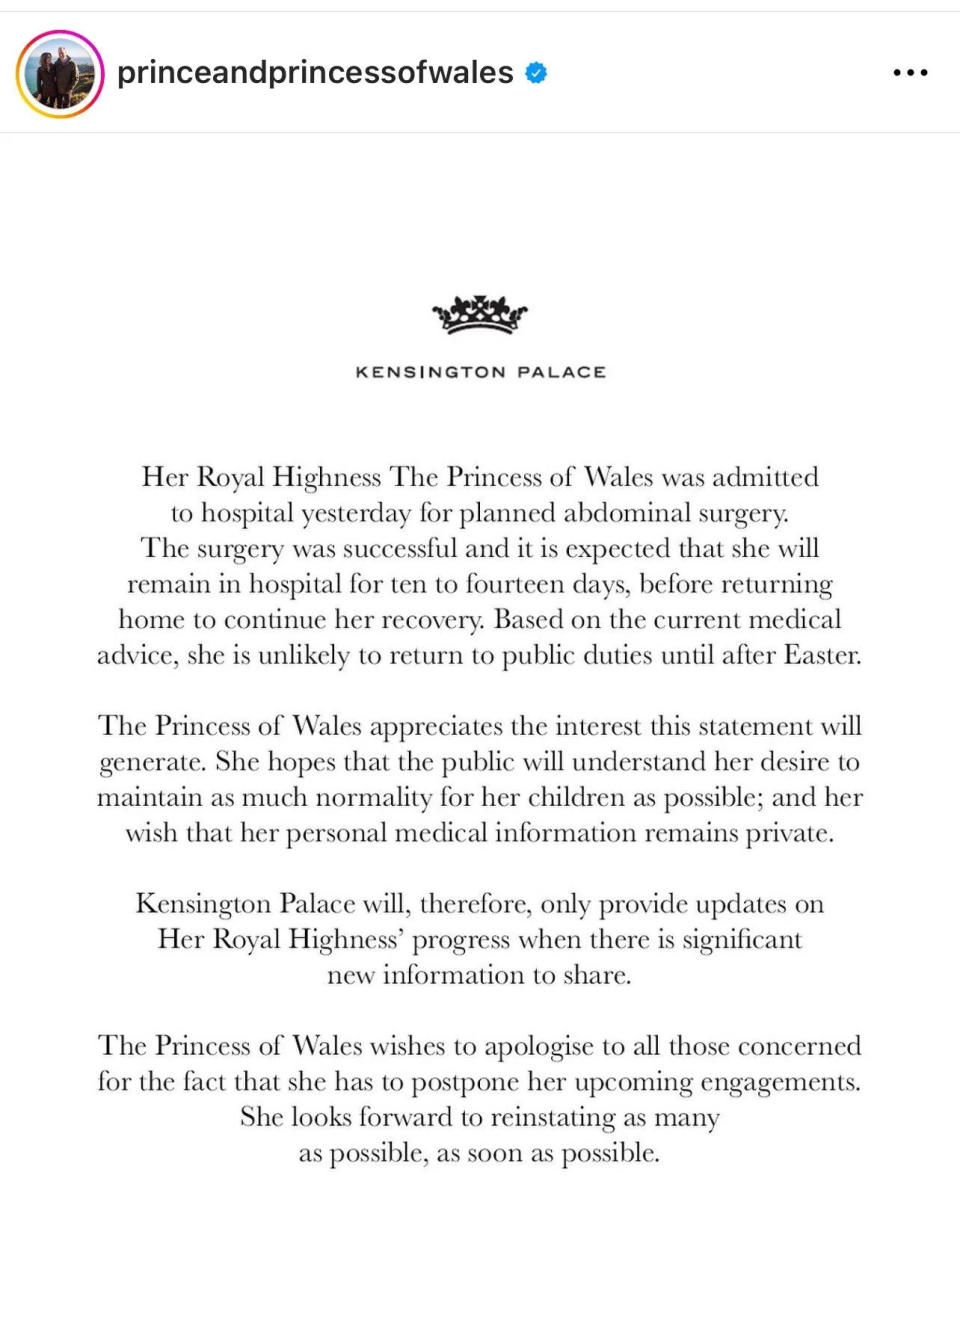 <strong>威廉王子夫婦的IG帳號發布聲明，說明凱特王妃目前狀況。（圖／翻攝自Instagram@princeandprincessofwales）</strong>